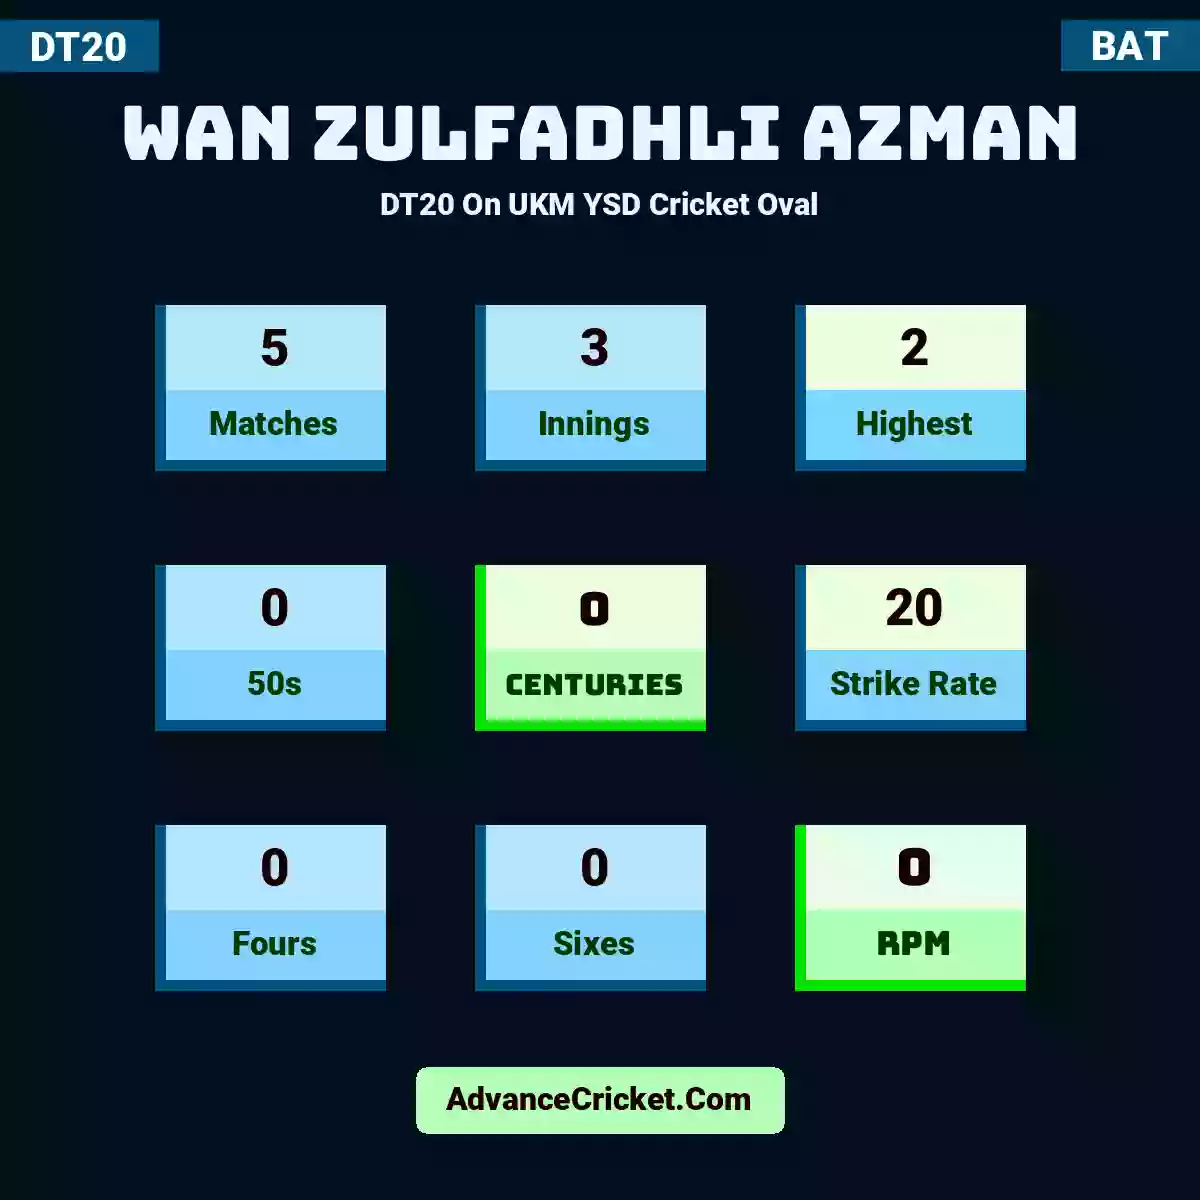 Wan Zulfadhli Azman DT20  On UKM YSD Cricket Oval, Wan Zulfadhli Azman played 5 matches, scored 2 runs as highest, 0 half-centuries, and 0 centuries, with a strike rate of 20. W.Zulfadhli.Azman hit 0 fours and 0 sixes, with an RPM of 0.